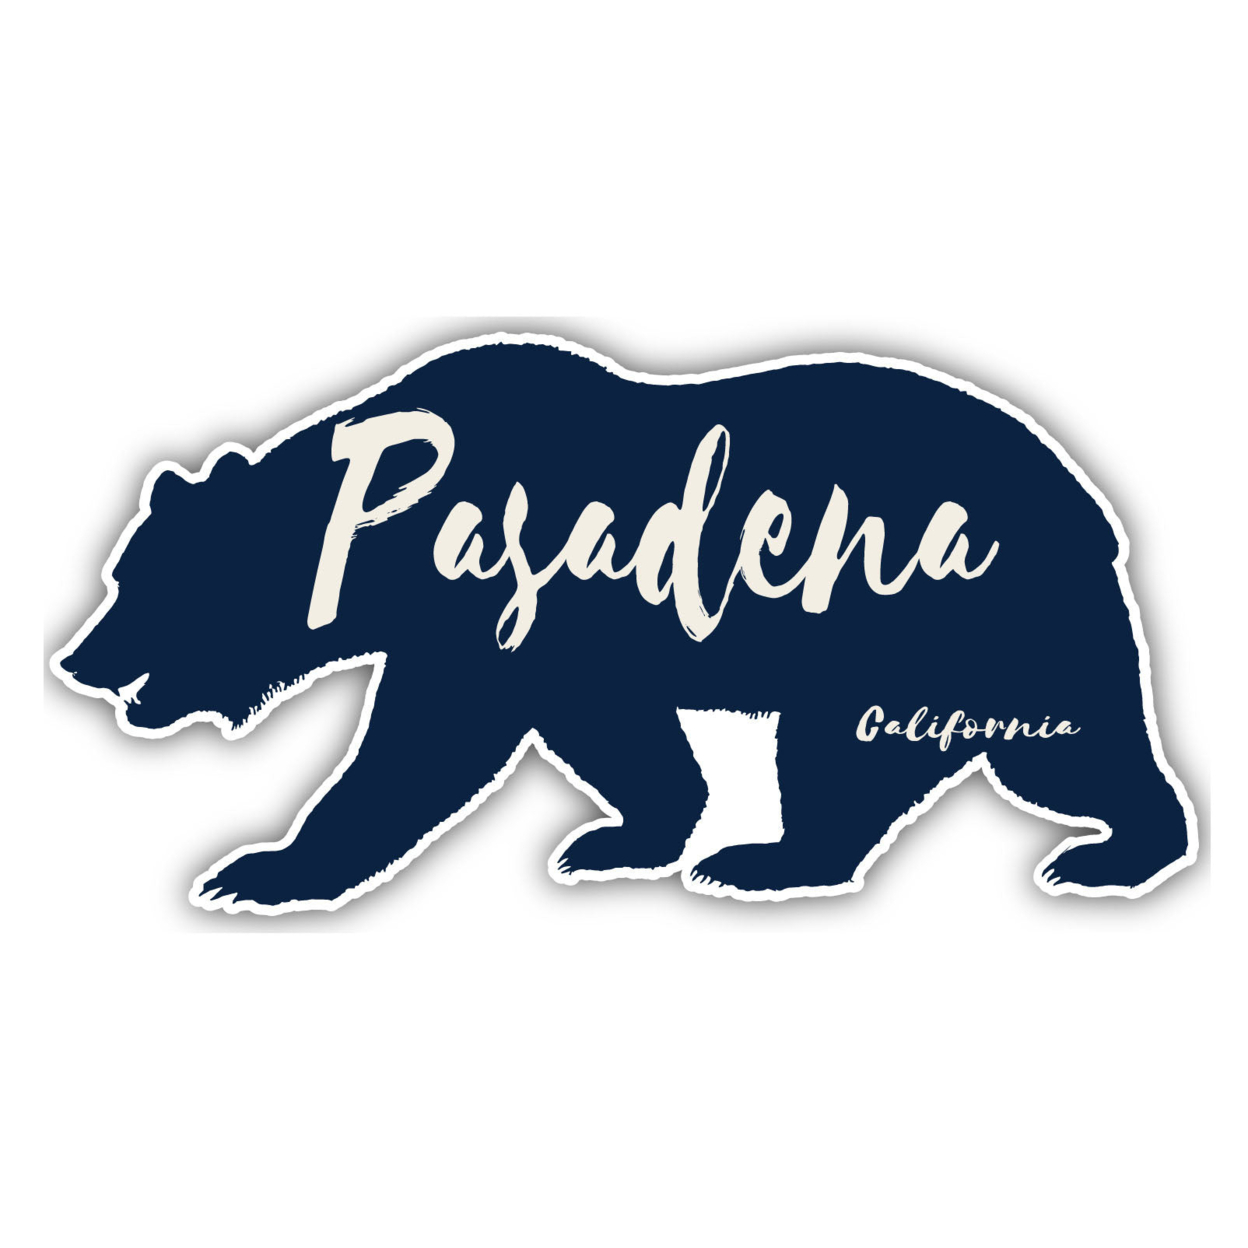 Pasadena California Souvenir Decorative Stickers (Choose Theme And Size) - Single Unit, 4-Inch, Bear